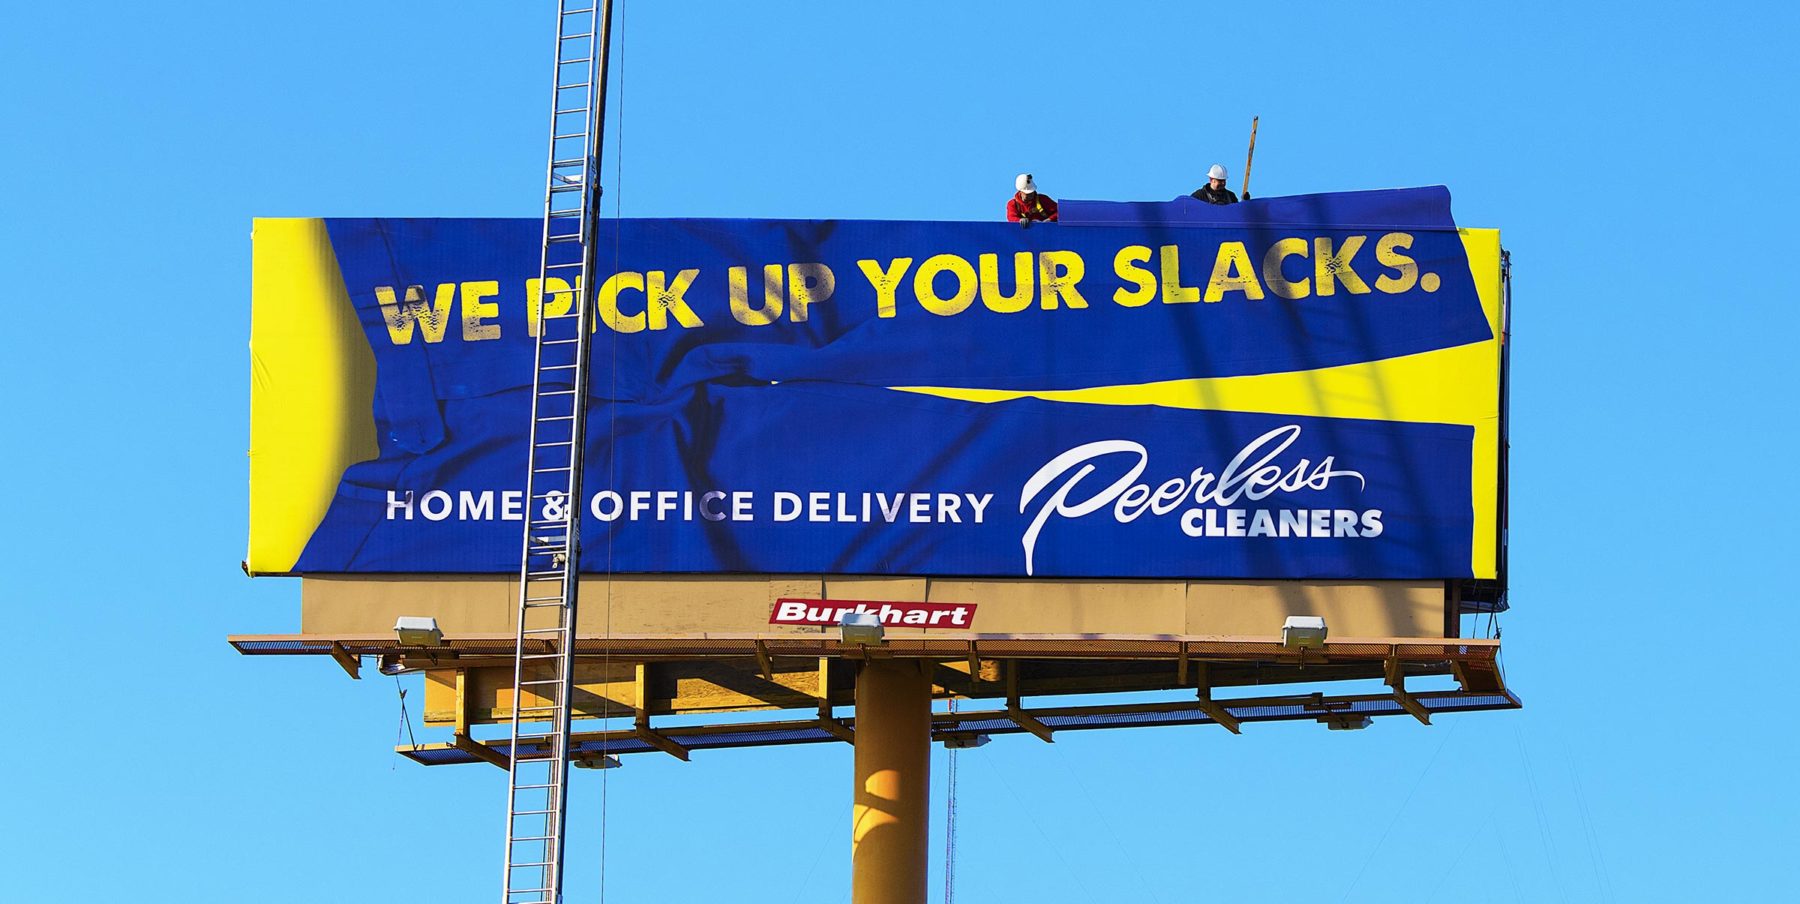 Peerless Cleaners - We pick up your slacks 